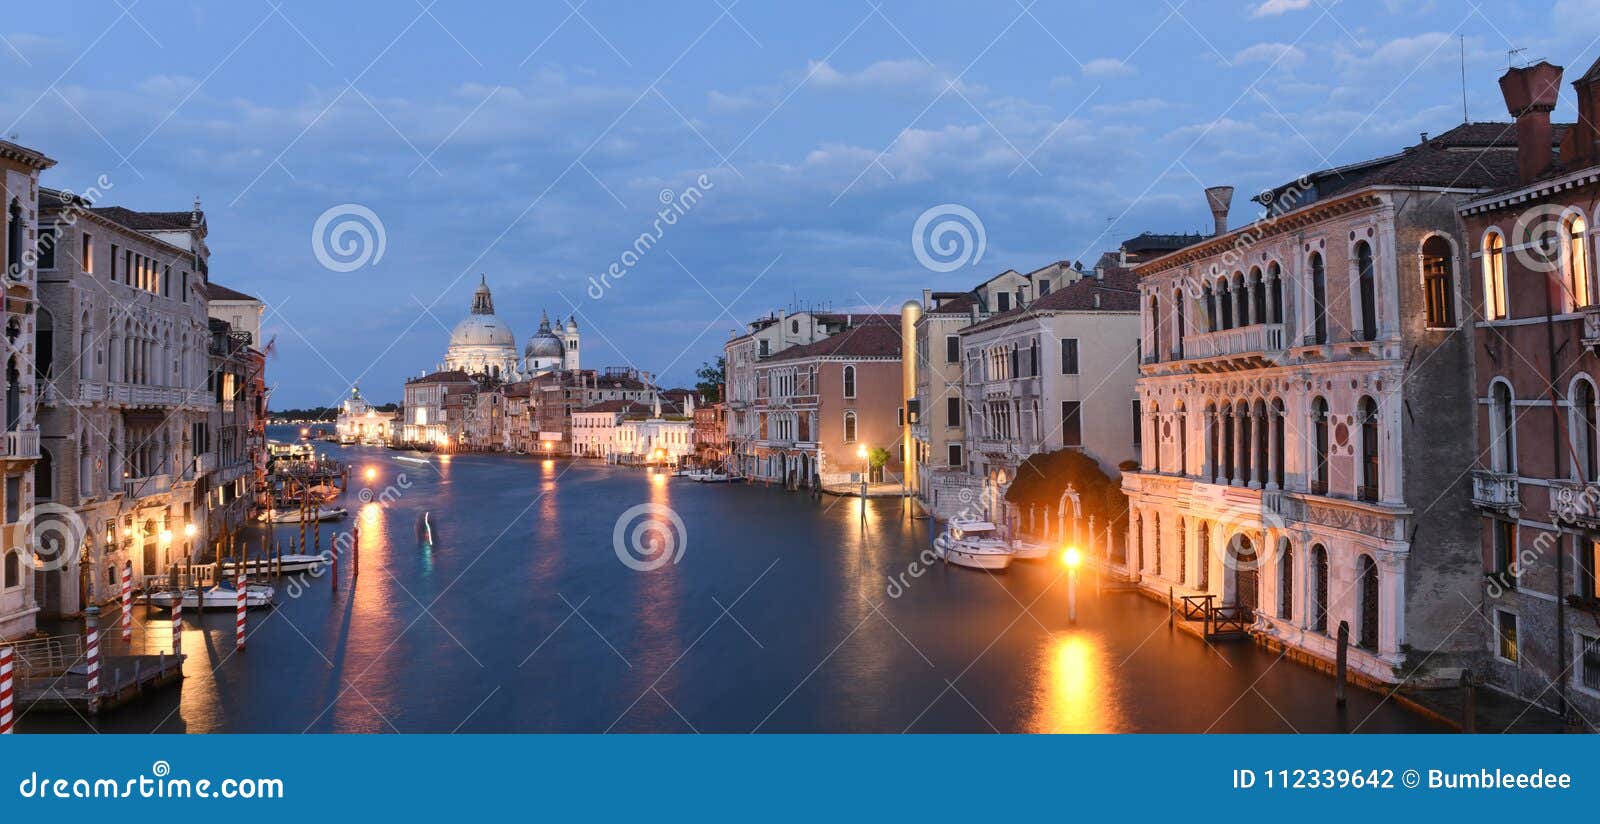 venice panorama at night with grand canal and basilica santa mar